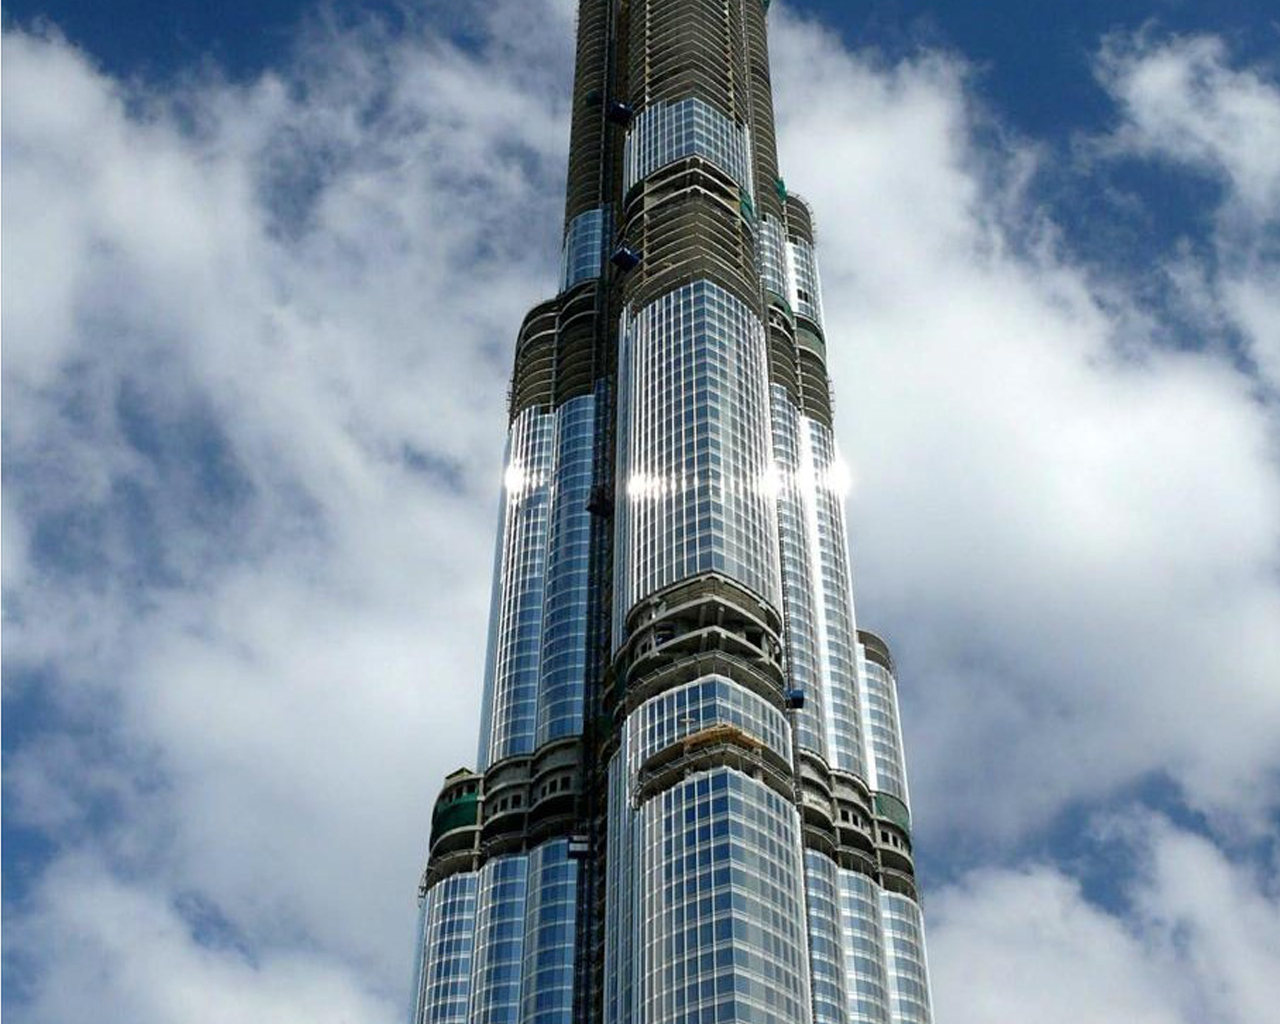 Dubai Burj Khalifa Hd - 1280x1024 Wallpaper 